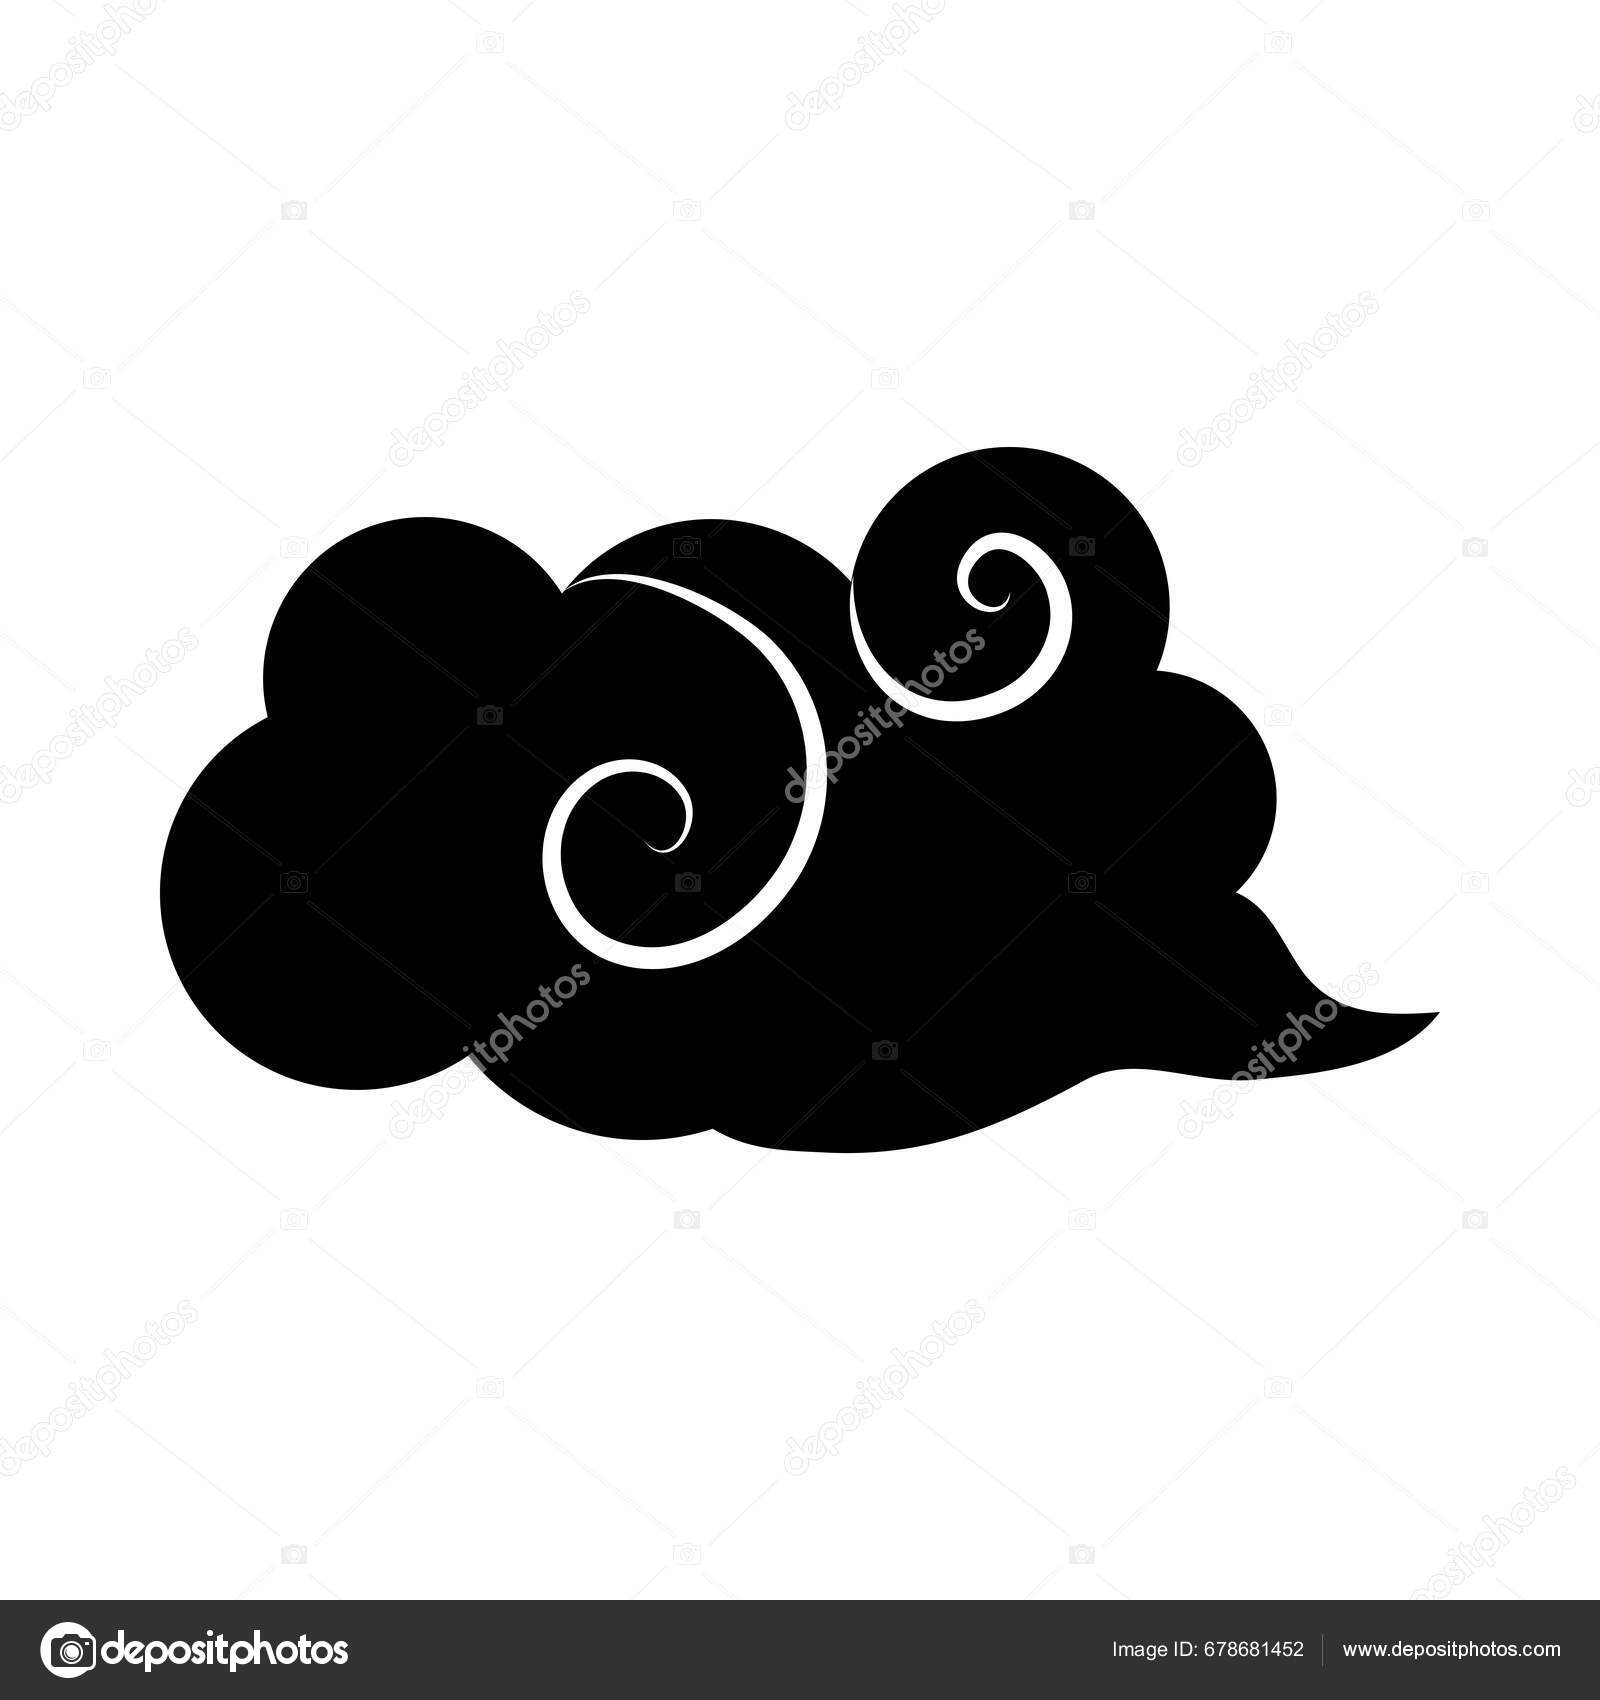 Nuvens Chinesas Logotipo Modelo Vector Símbolo Natureza Royalty Free SVG,  Cliparts, Vetores, e Ilustrações Stock. Image 160008706